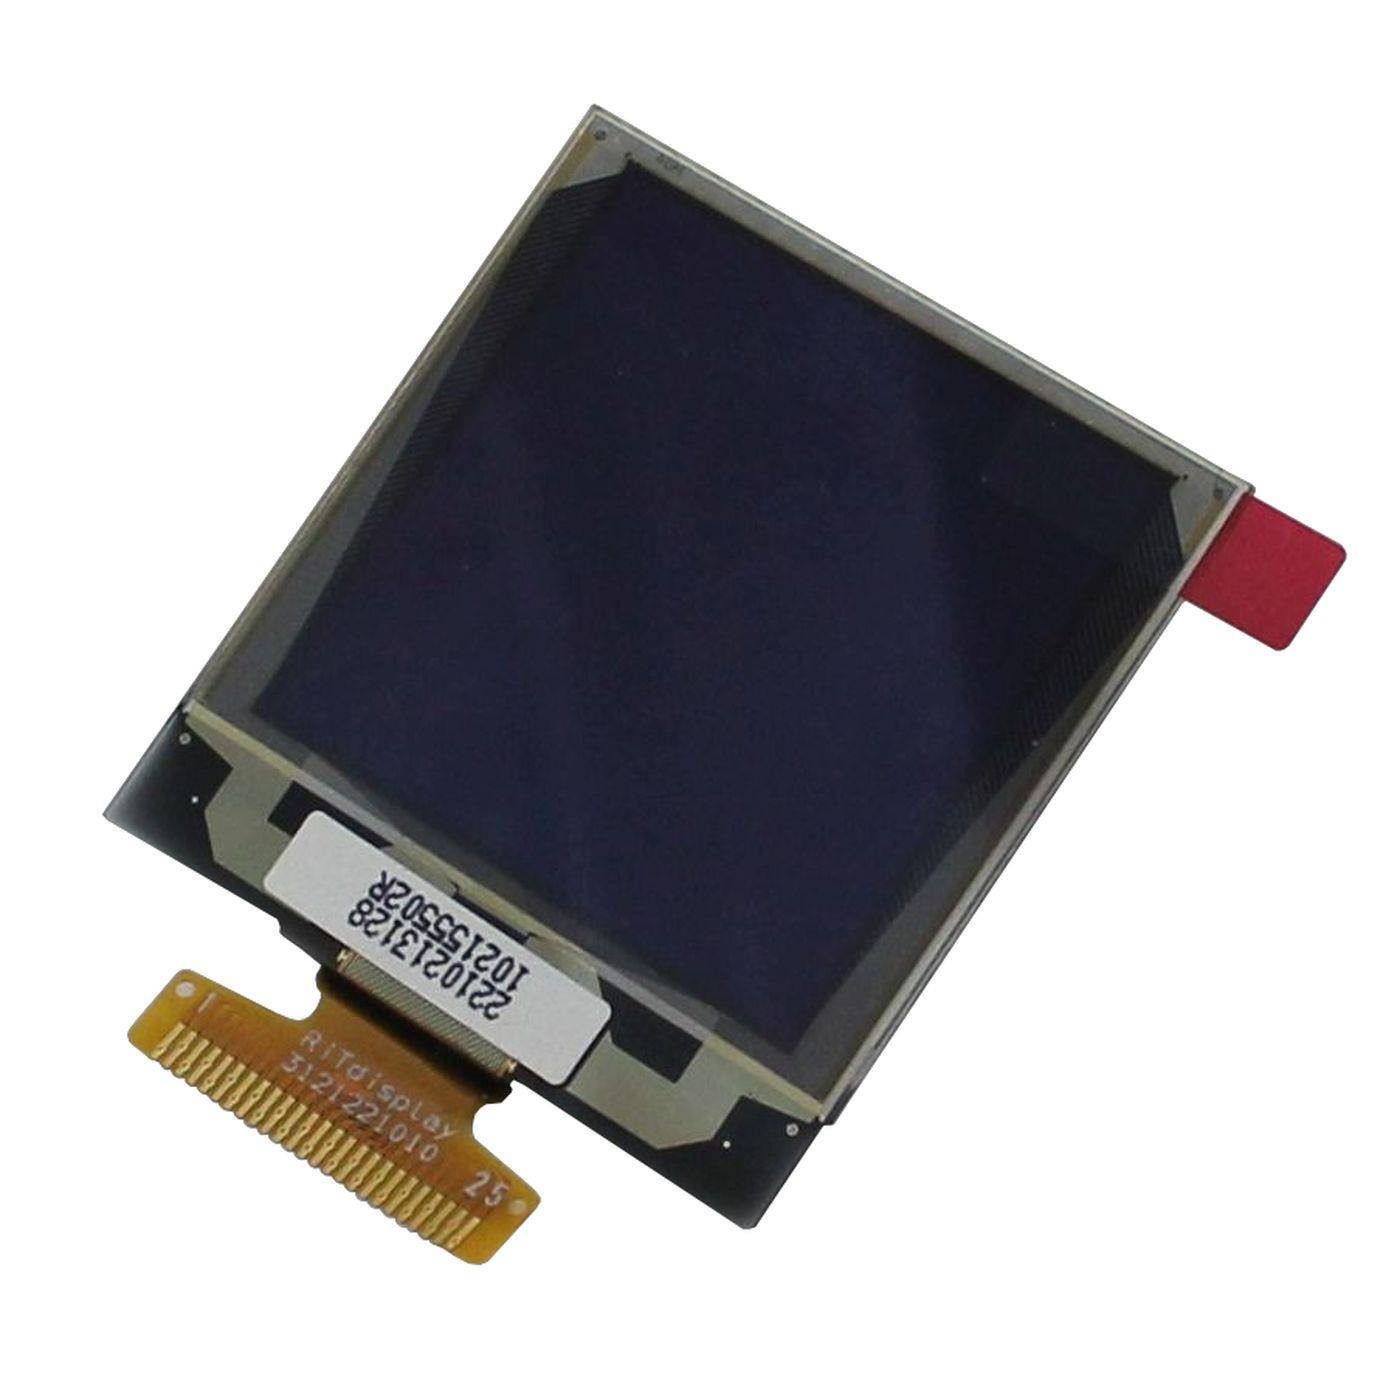 LCD Display RiTdisplay Corp. RTD9922102000 33x30mm